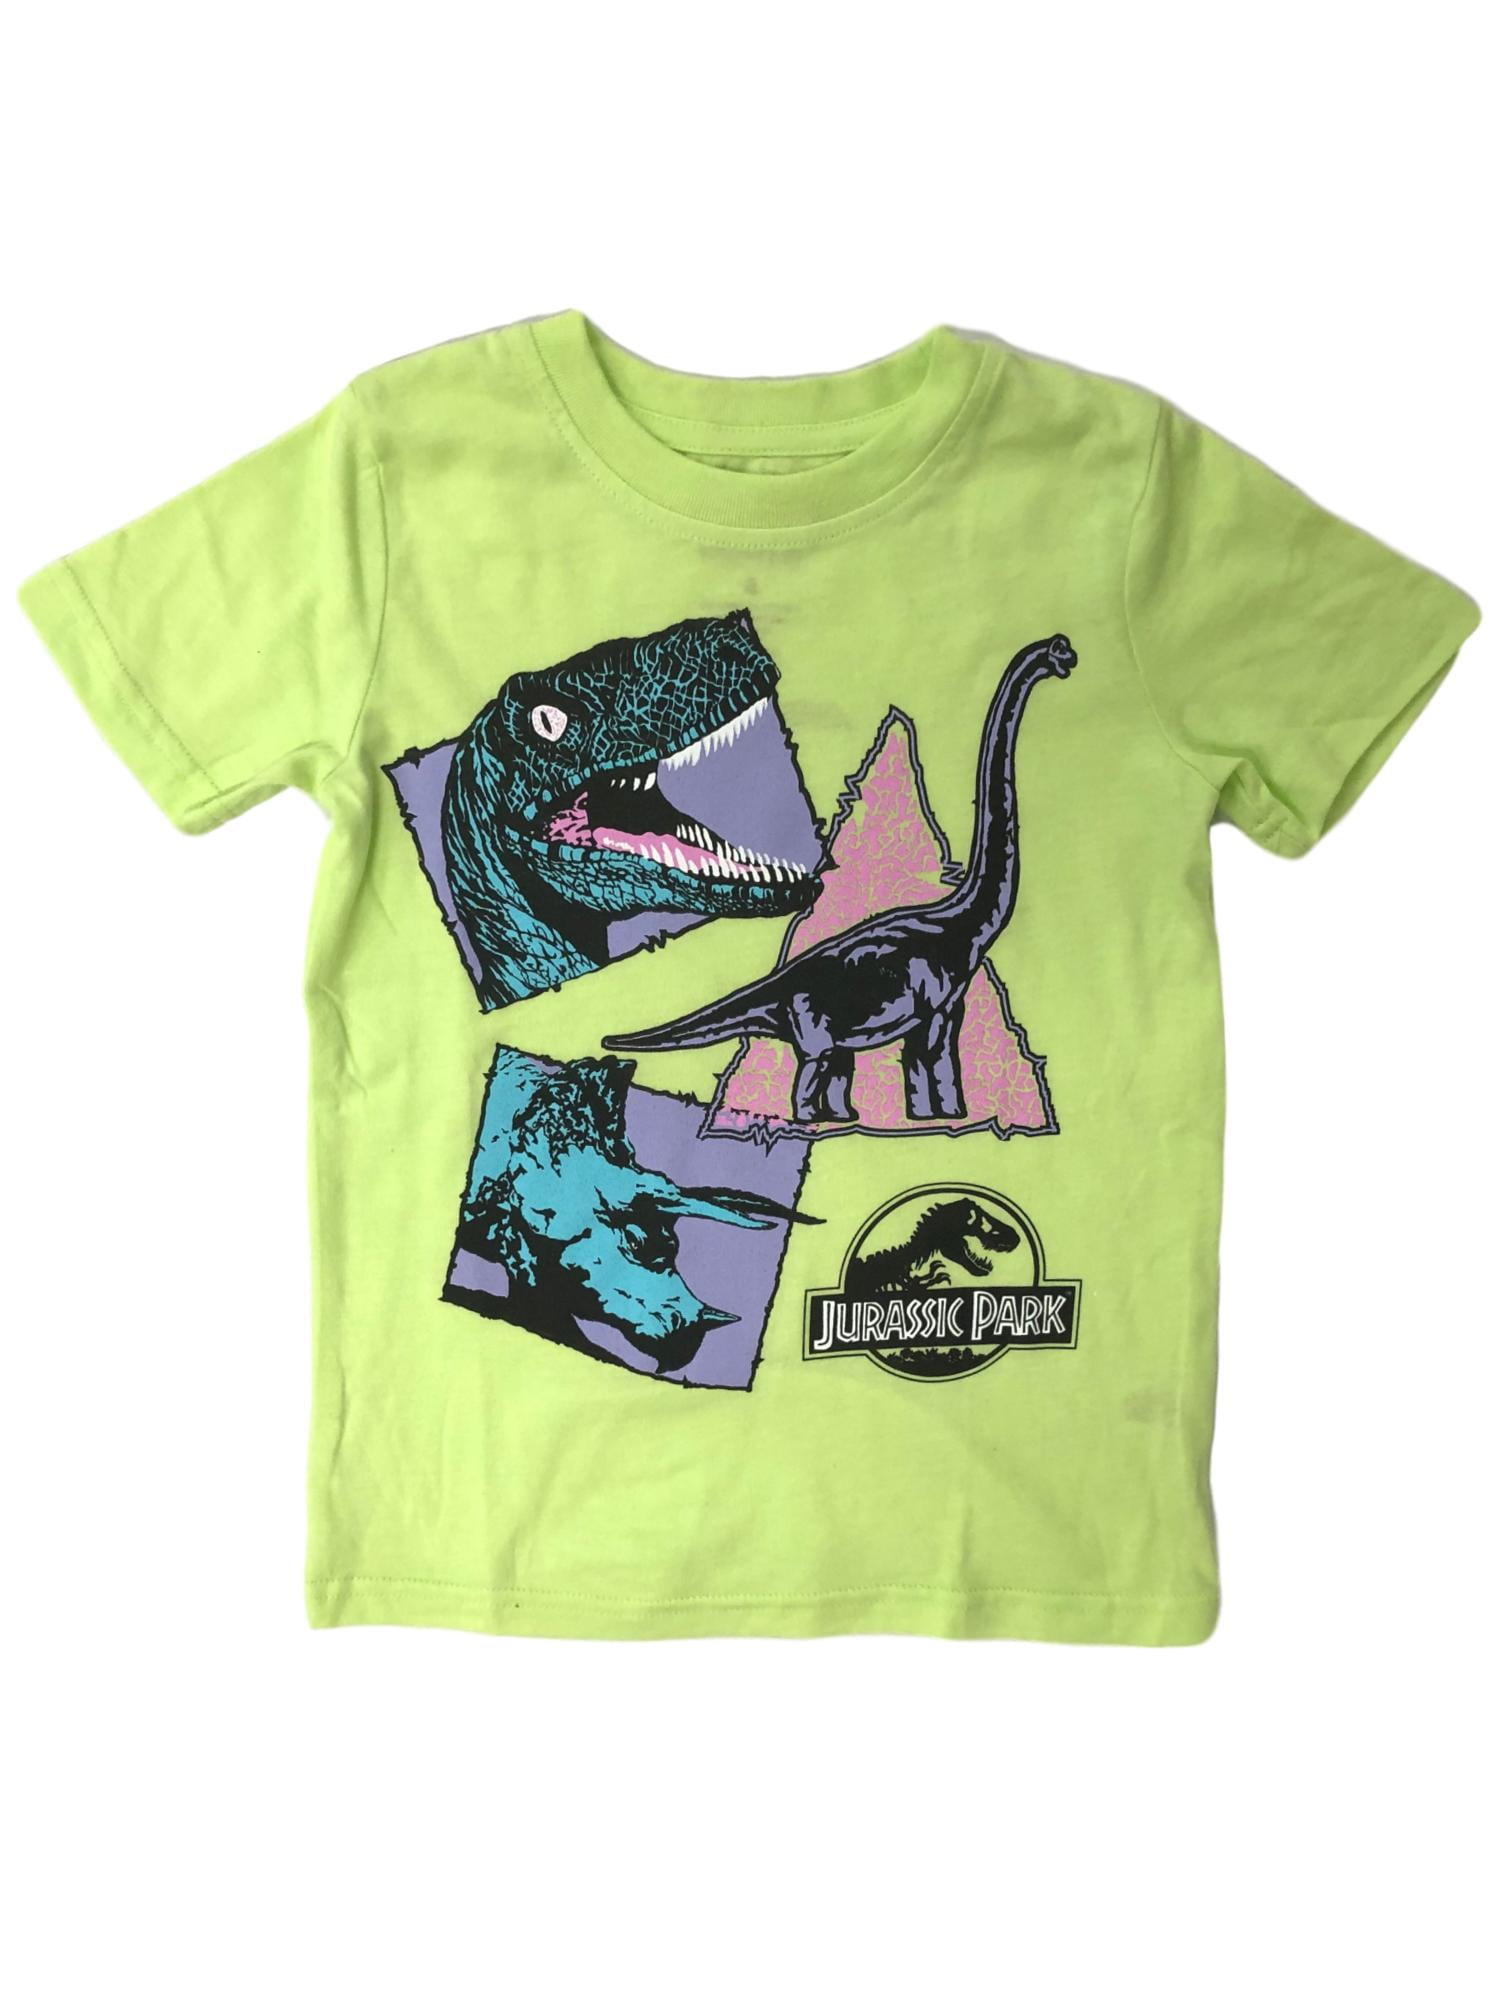 T-Shirt Green Tee Jurassic Park 4 Boys Dinosaur Neon Sleeve Shirt Short